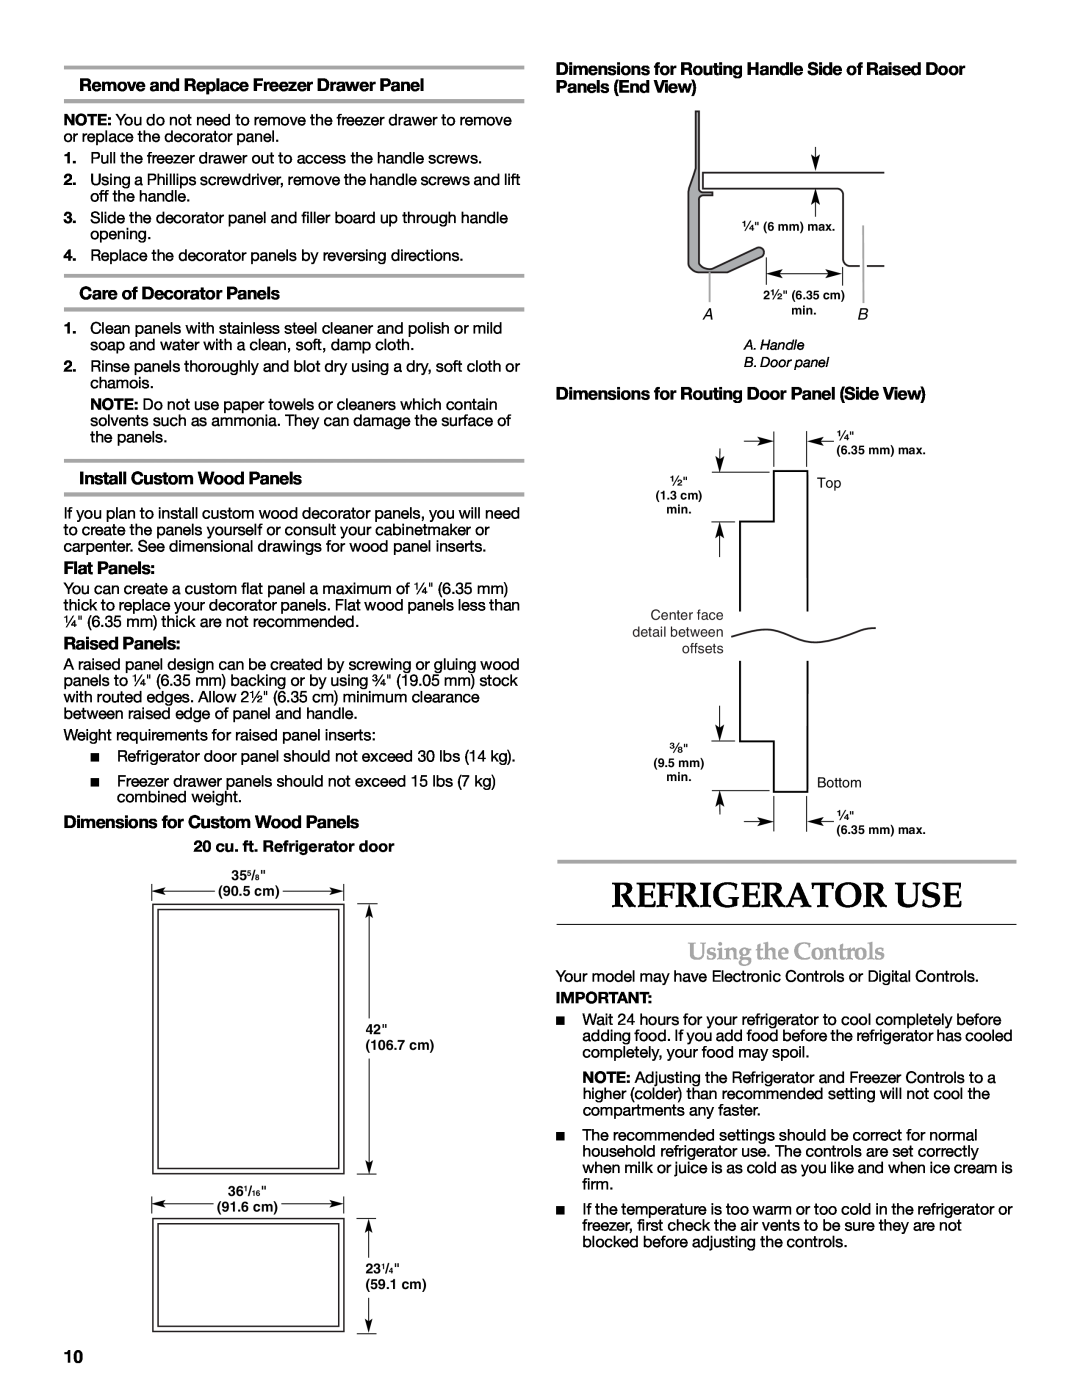 KitchenAid W10137649A Refrigerator Use, Using the Controls, Remove and Replace Freezer Drawer Panel, Flat Panels 